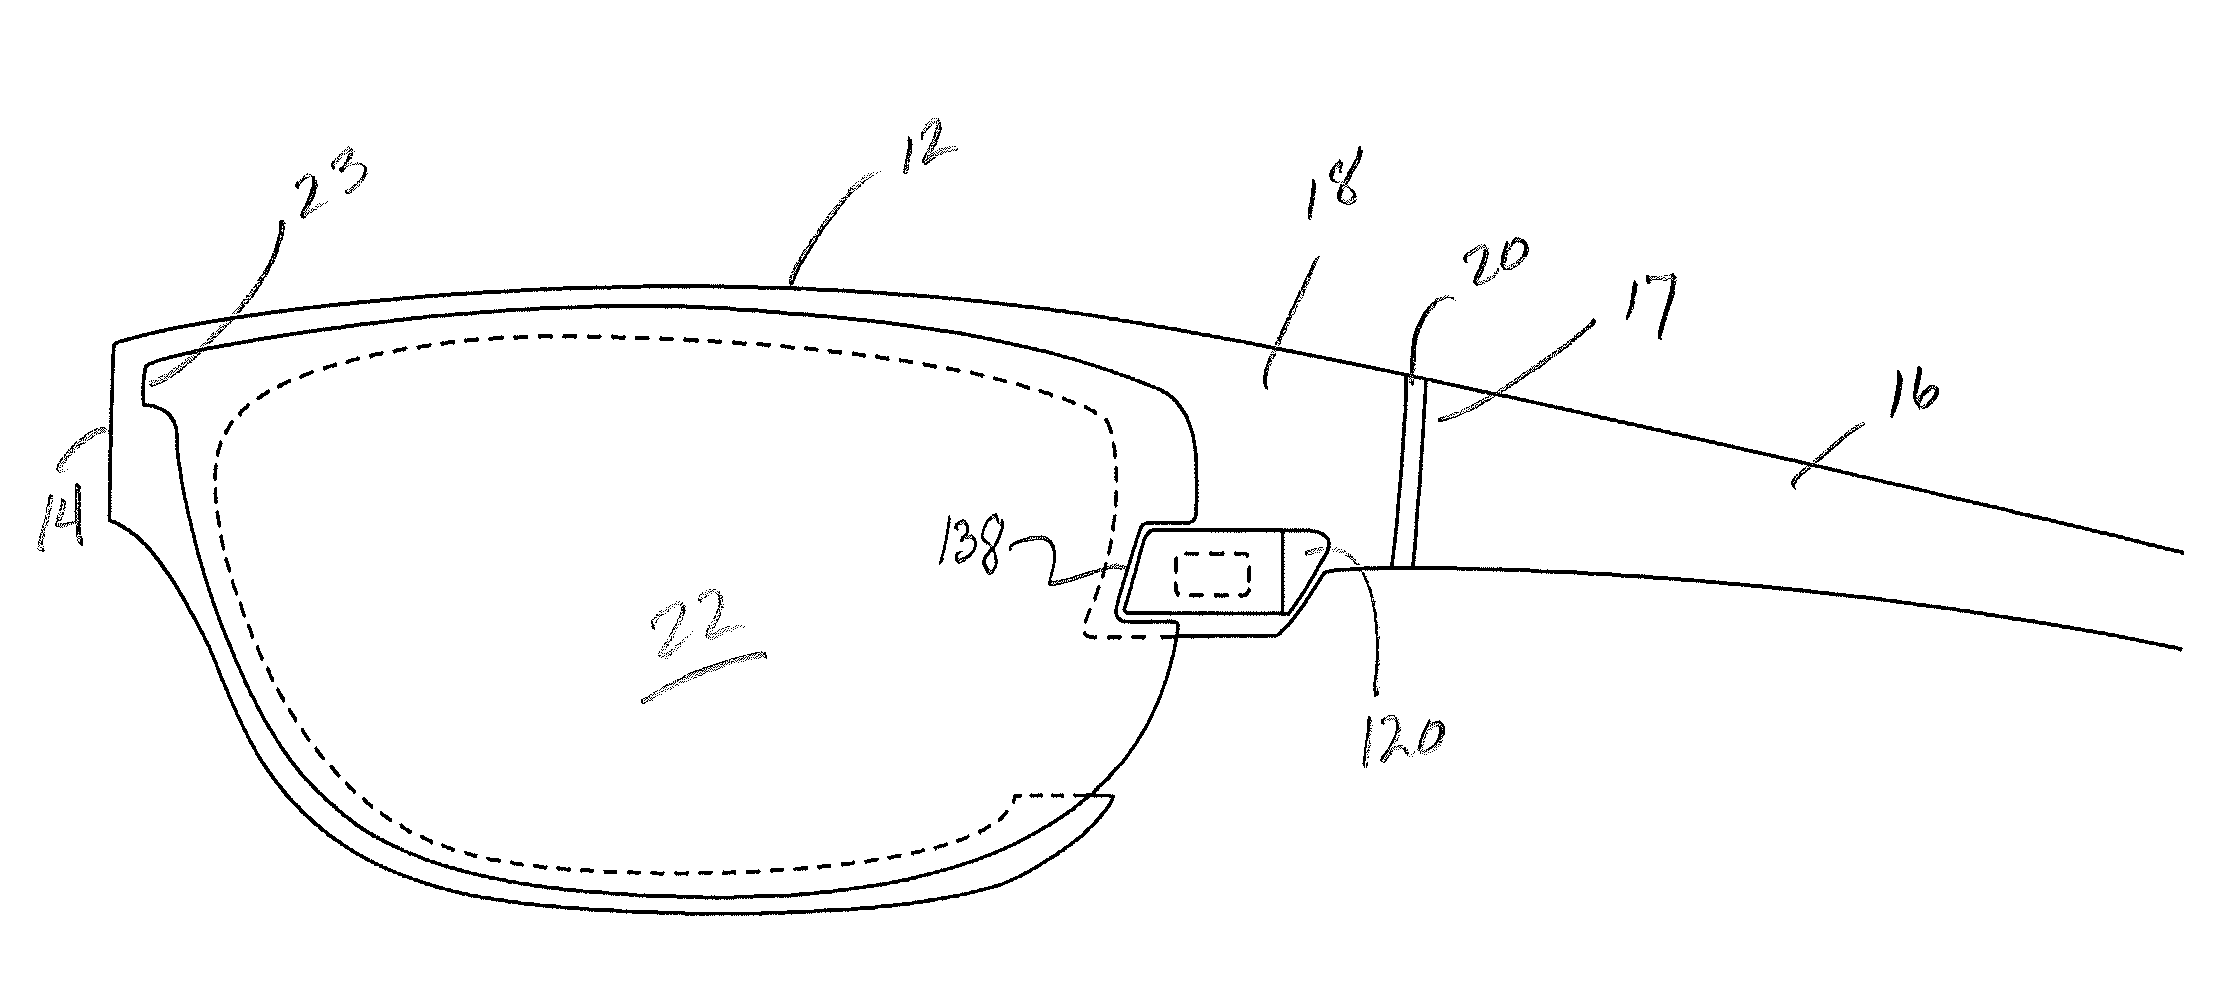 Eyeglasses with lens securing mechanism for facilitating removable lenses